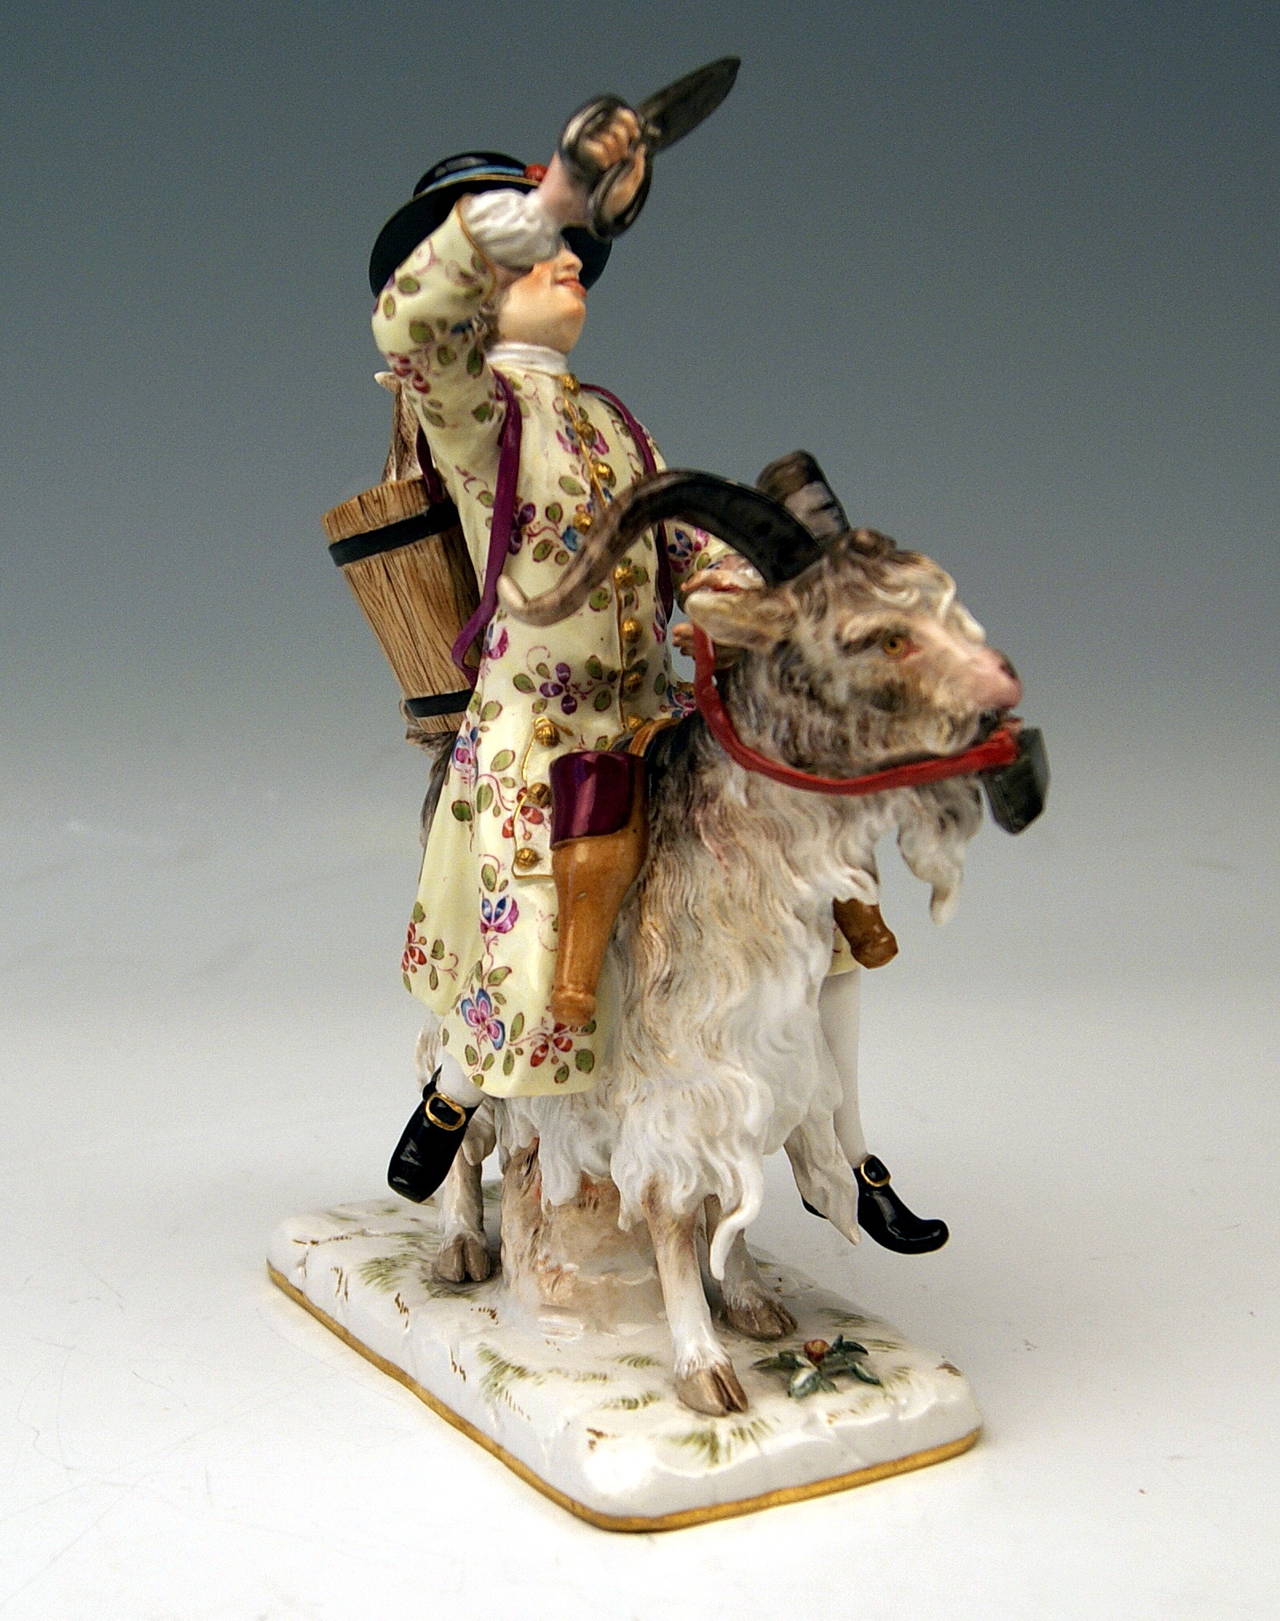 Meissen Gorgeous Figurine Group created by Johann Joachim Kändler 
(1706 - 1775)  around the year 1740:  so-said  ‘Tailor Of Count Bruehl Riding on Goat.'

Presumptive Background:
Heinrich, Count von Bruehl   (1700 - 1763)   was Chief Minister